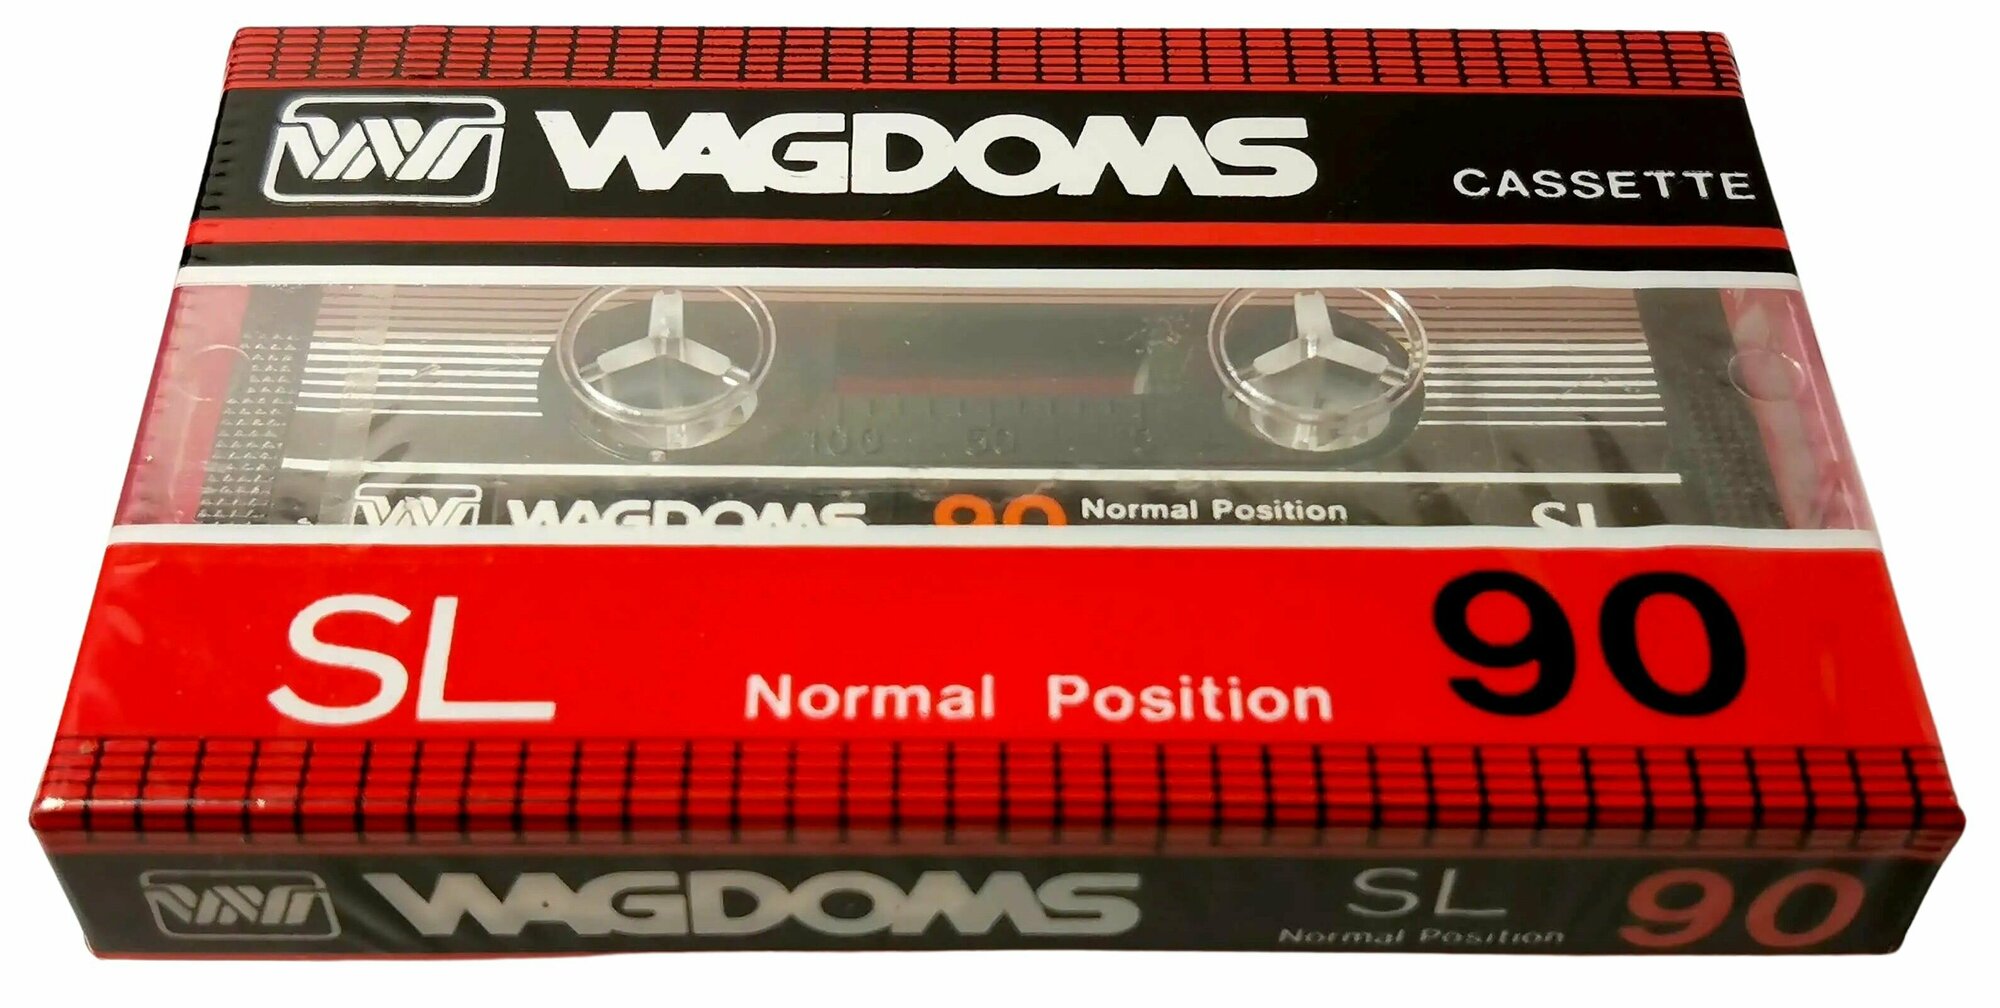 Wagdoms SL-90 Аудиокассета магнитофонная 90мин